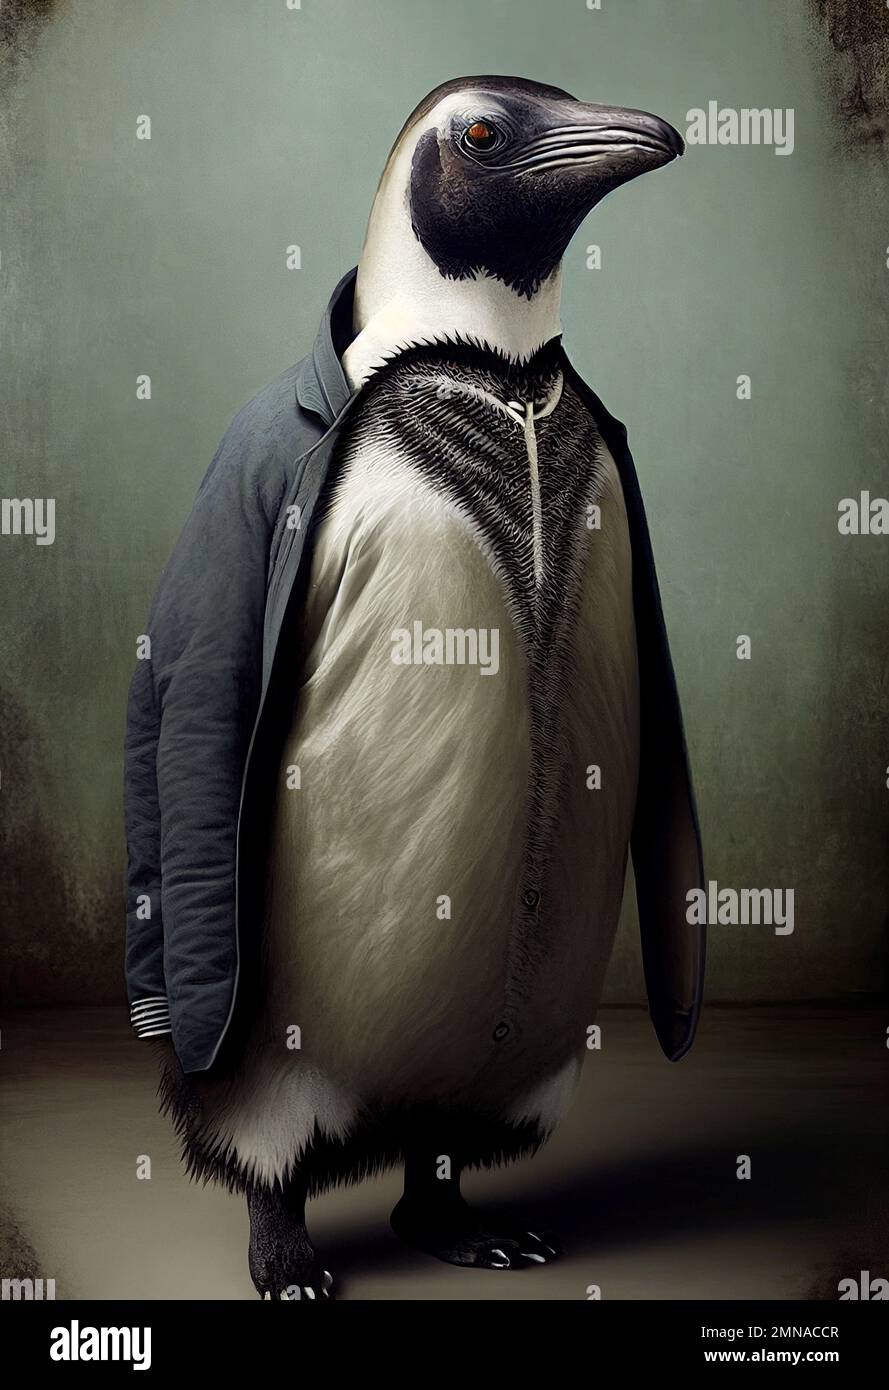 Penguin wearing clothes, surreal hybrid creature in studio setting, fanatsy animal, illustration Stock Photo